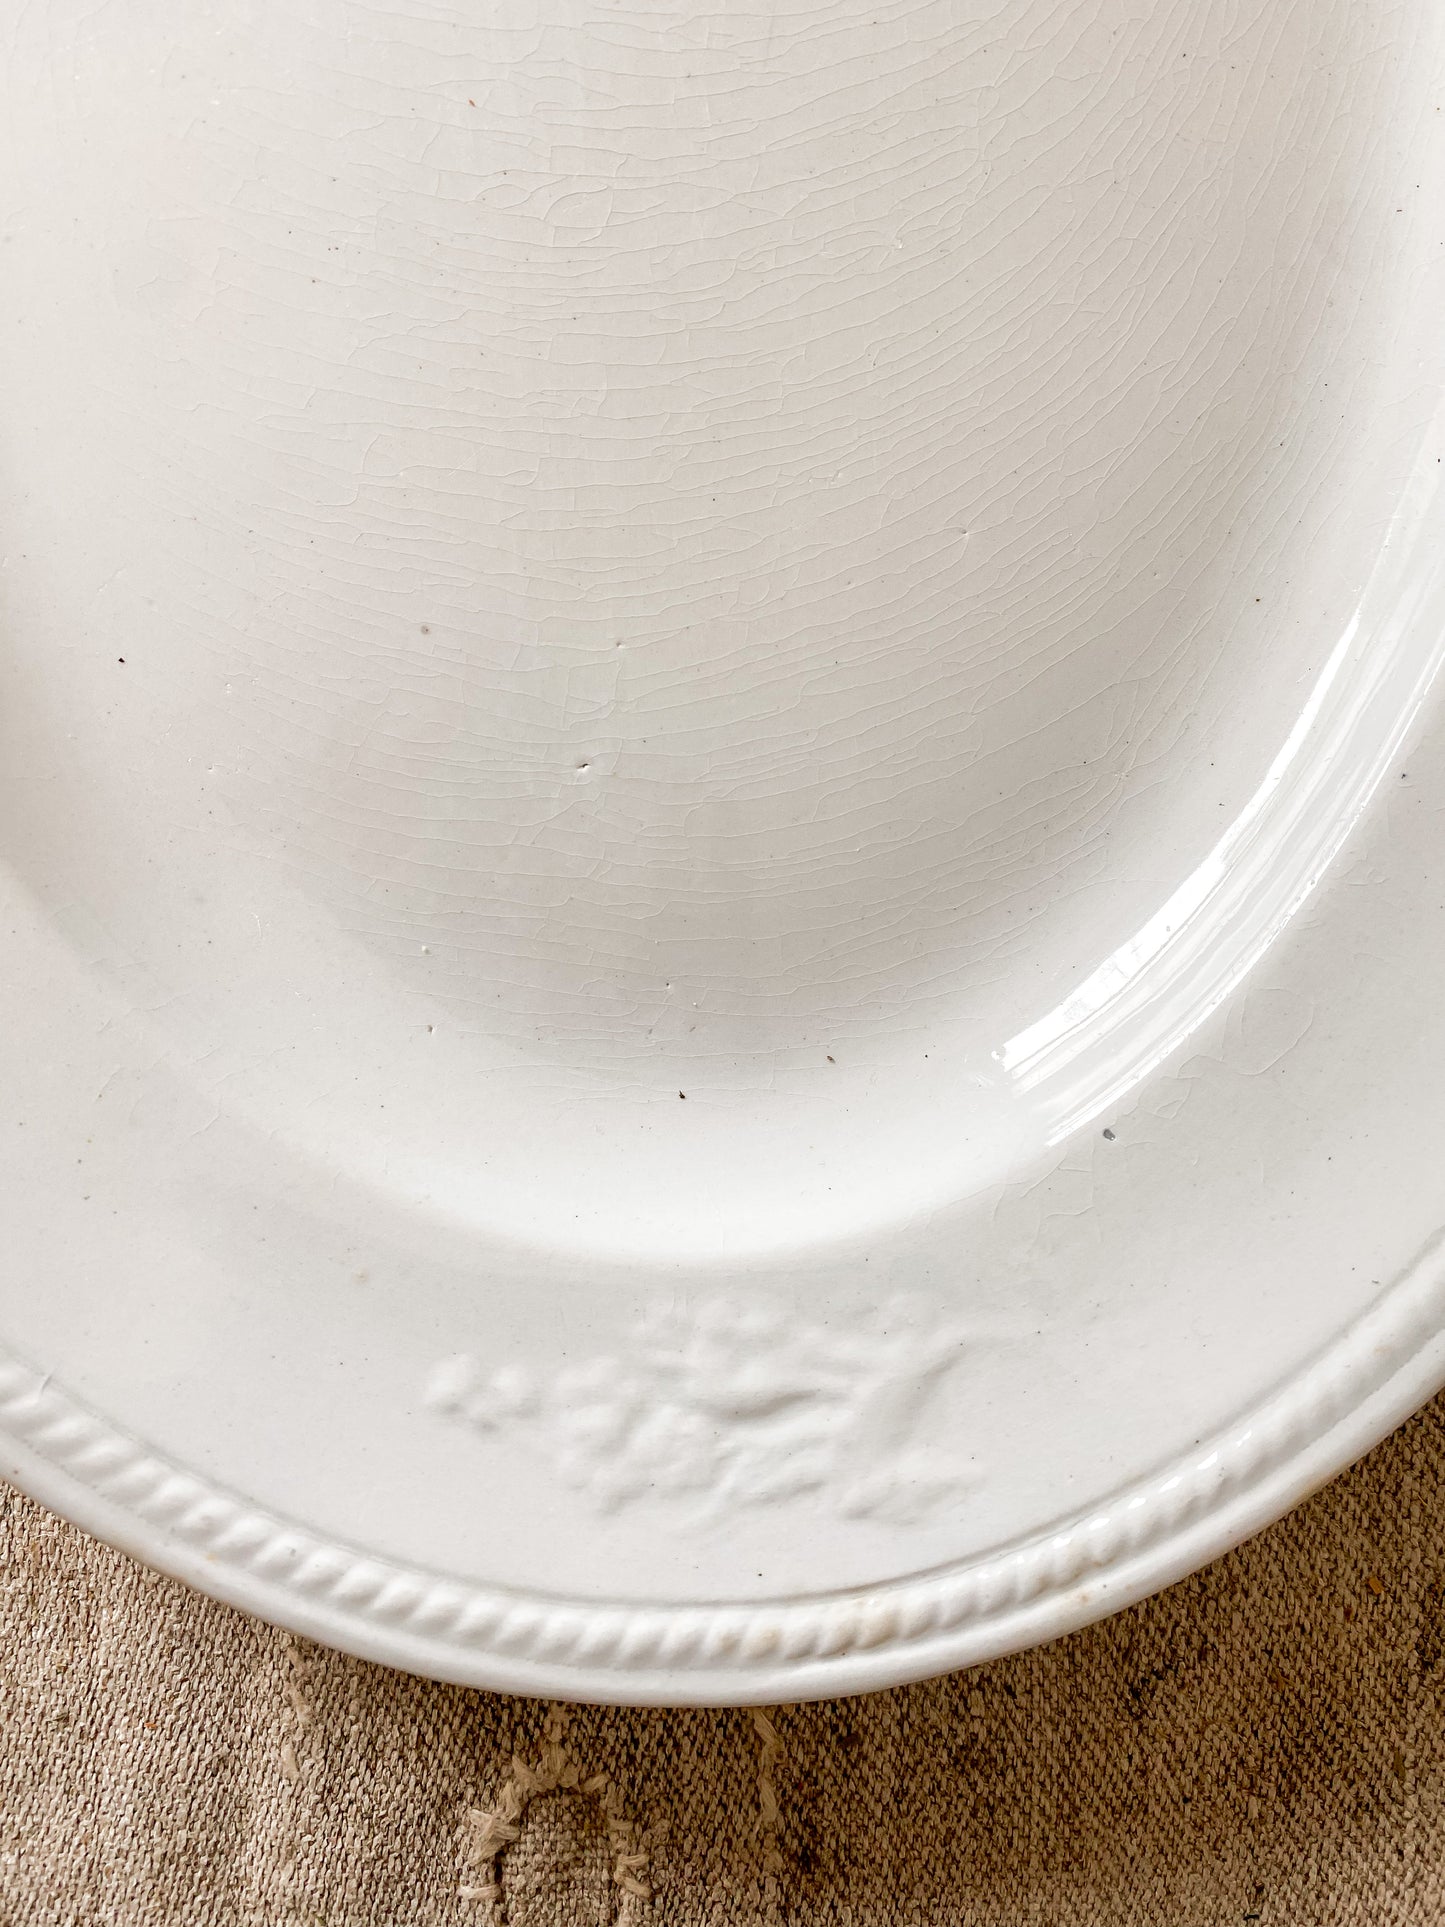 Antique White Ironstone Platter | Oriental Shape by W. & E. Corn, Burslem, England, c1880